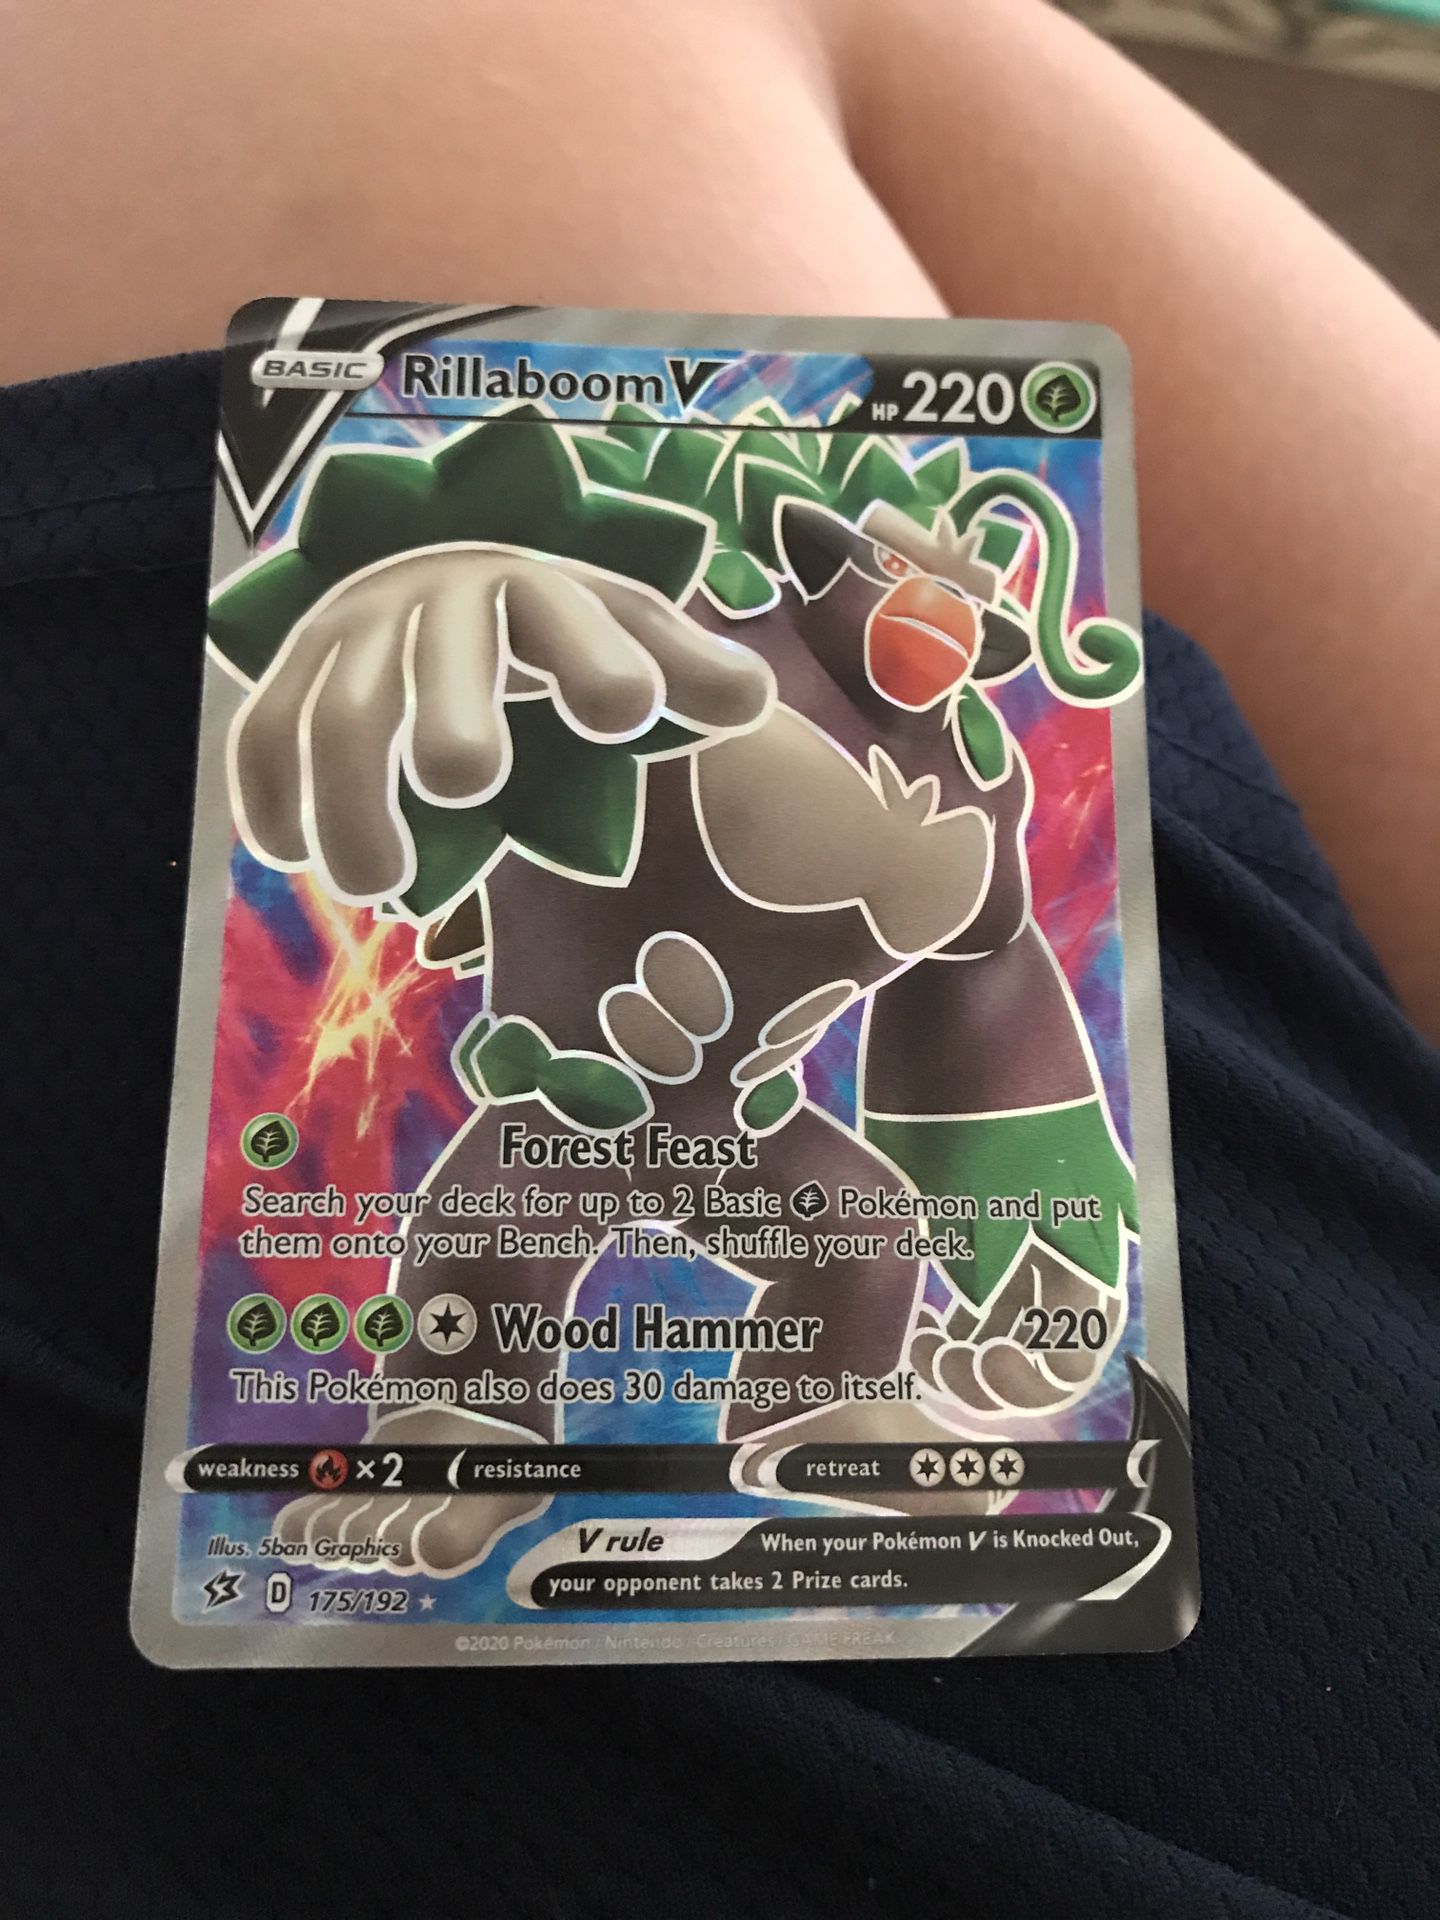 Rare Pokémon card worth 11 dollars